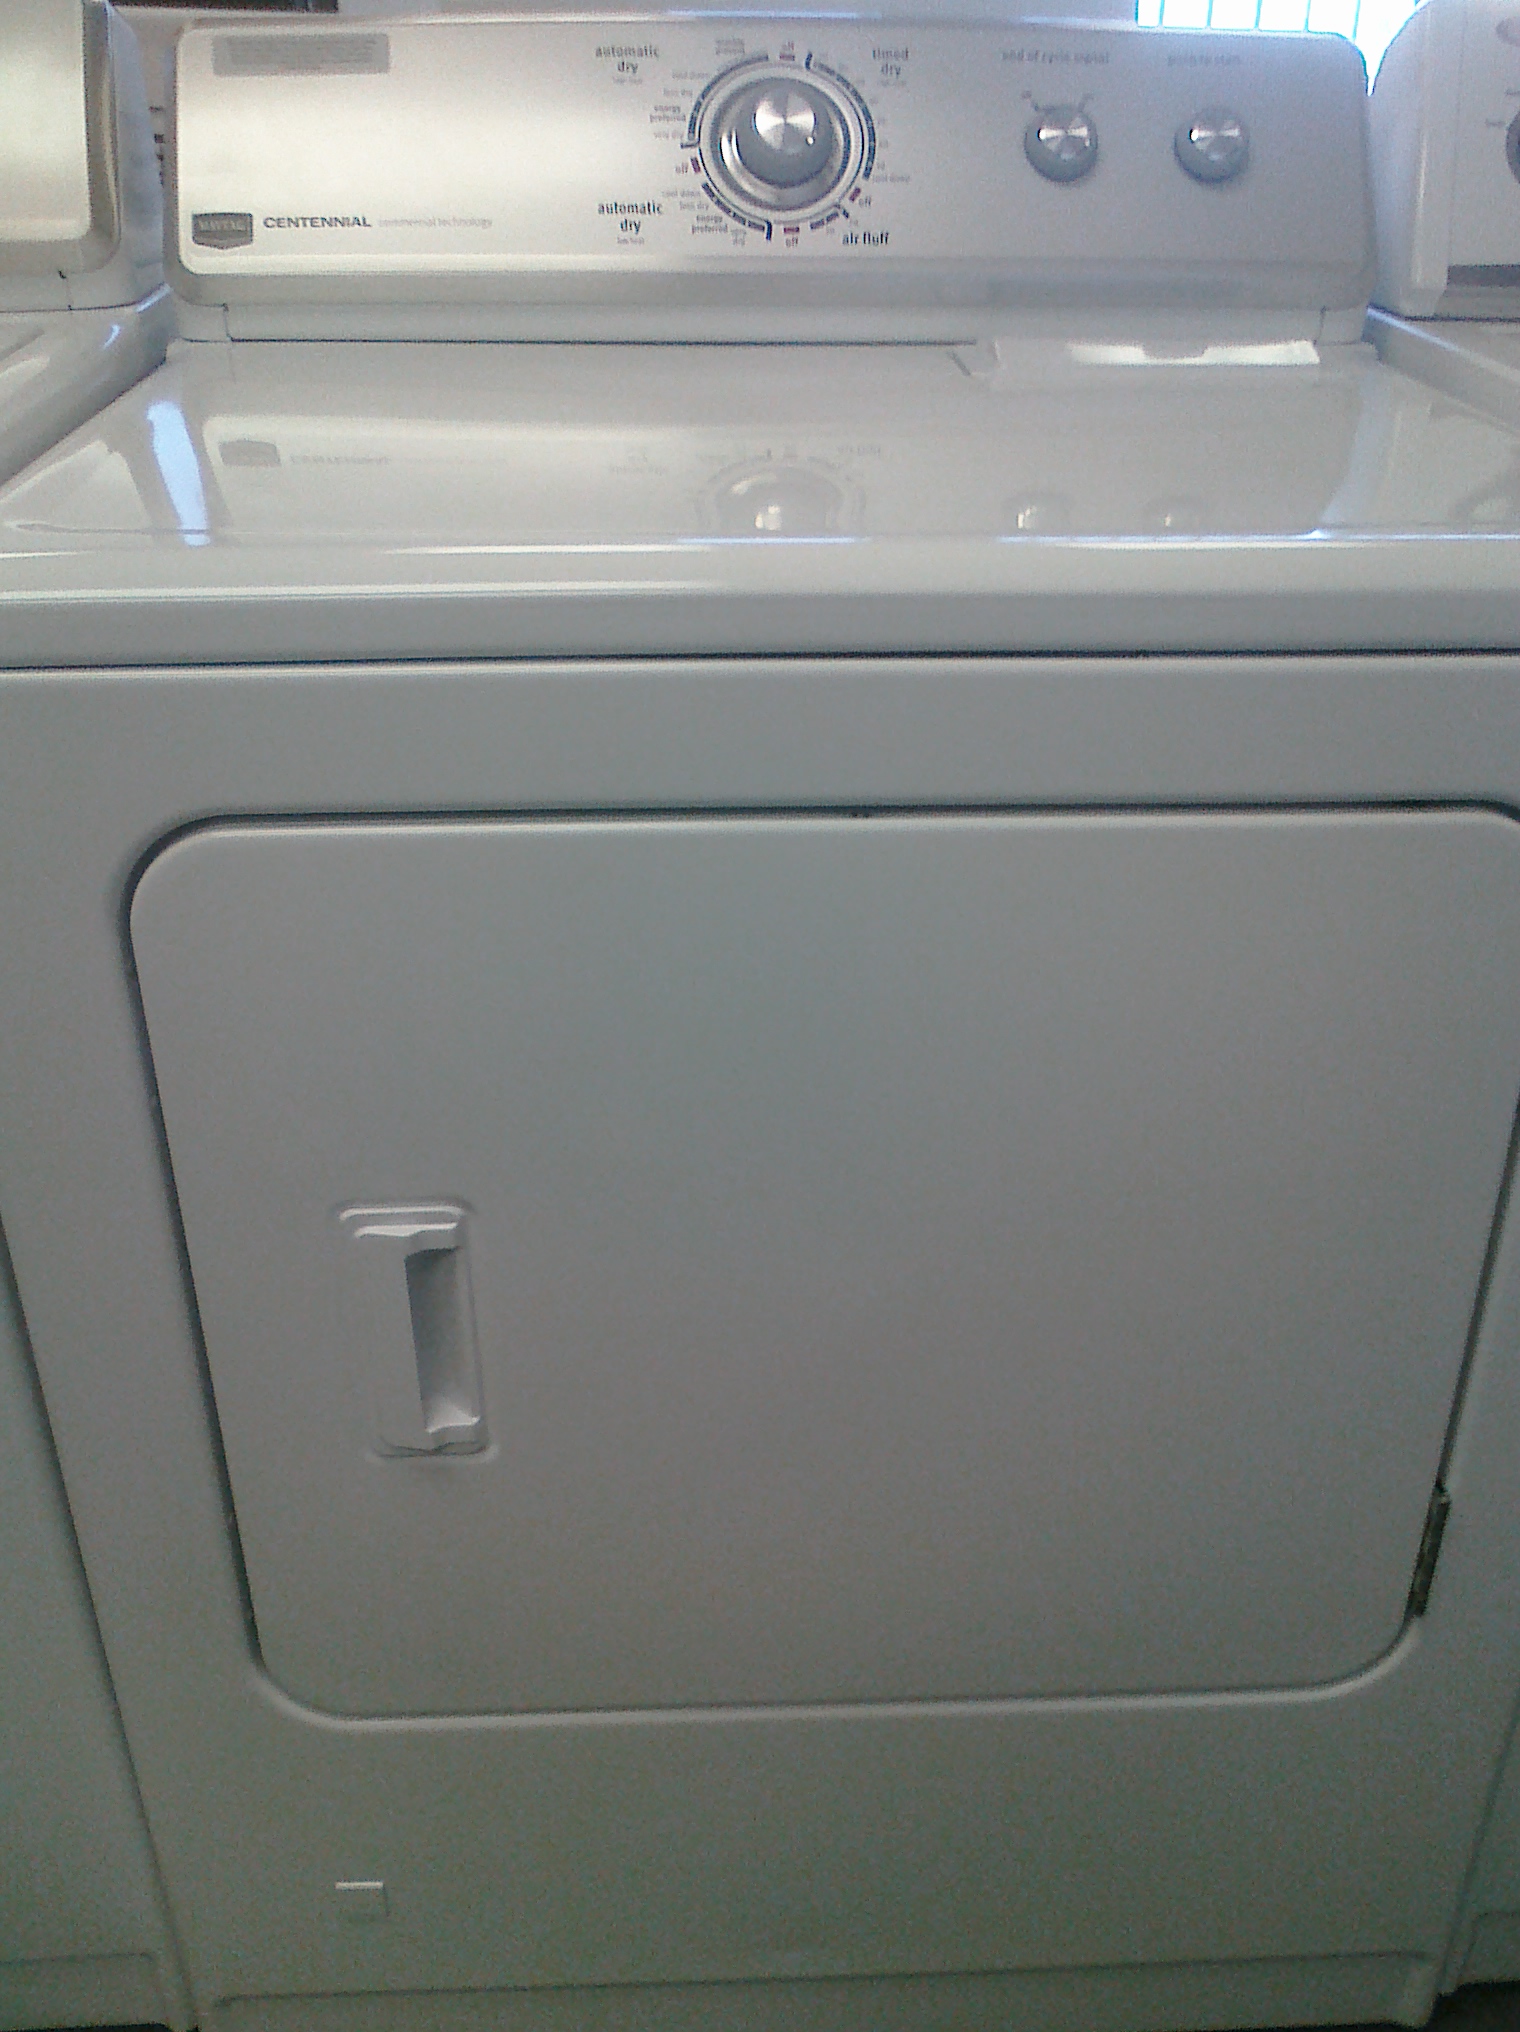 (9) Maytag MGDC400VW Gas Dryer, White